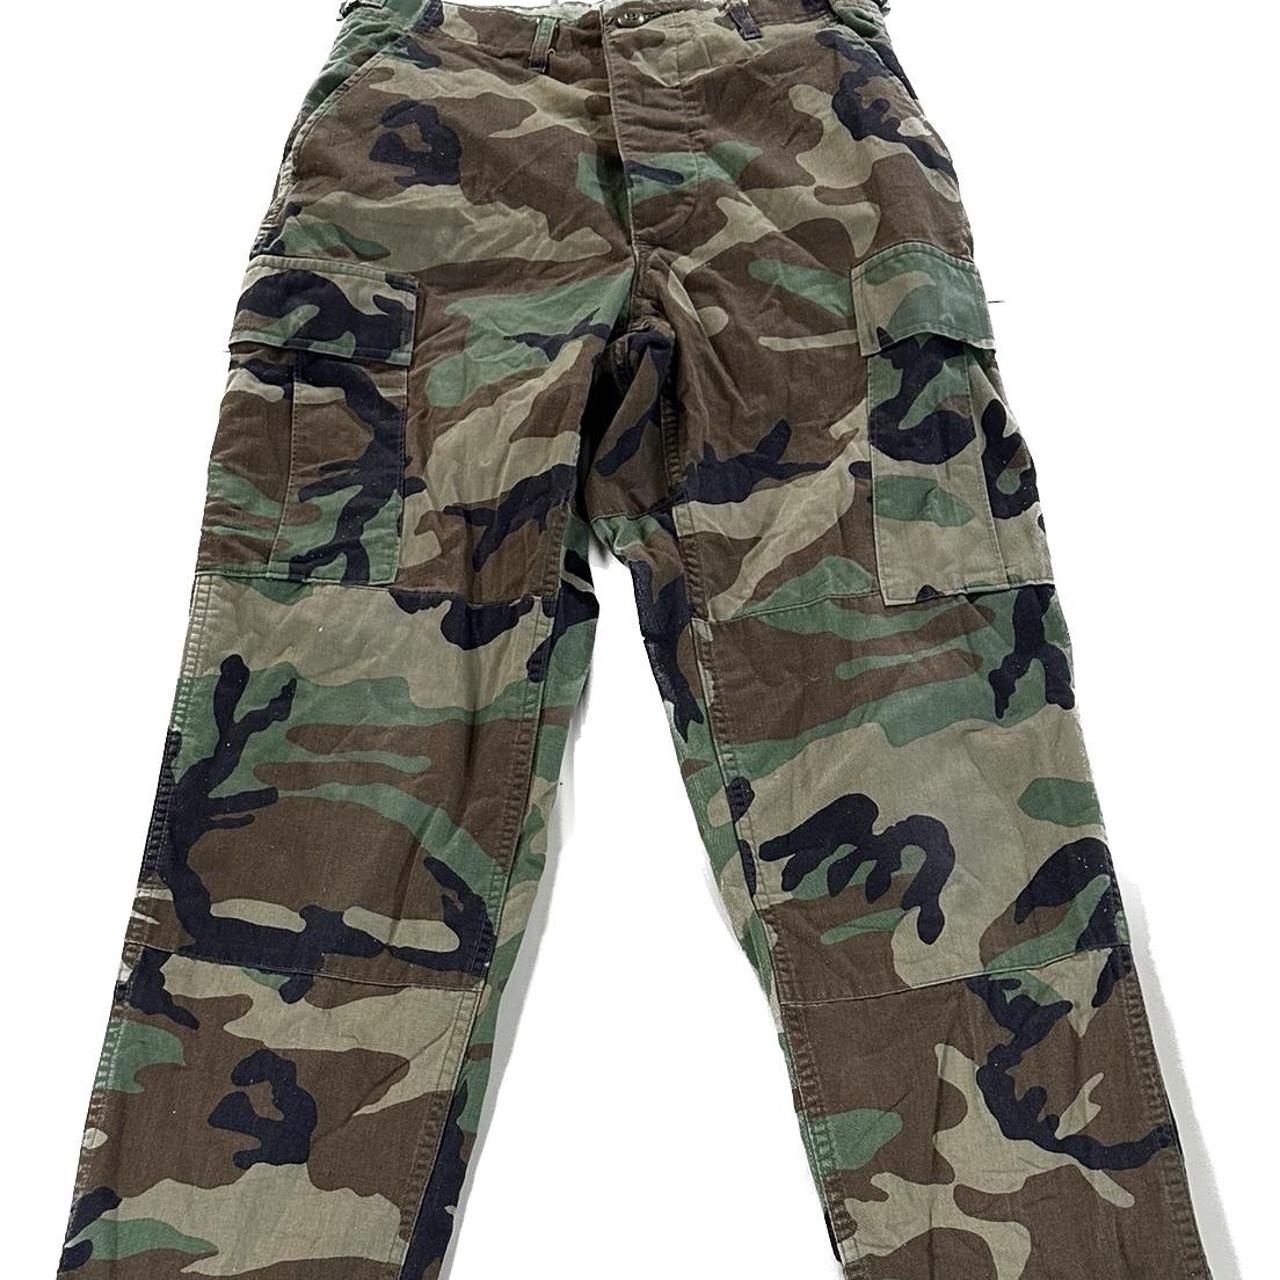 Camo Cargo Pants Woodland Green Multi Pocket 29x29 - Depop